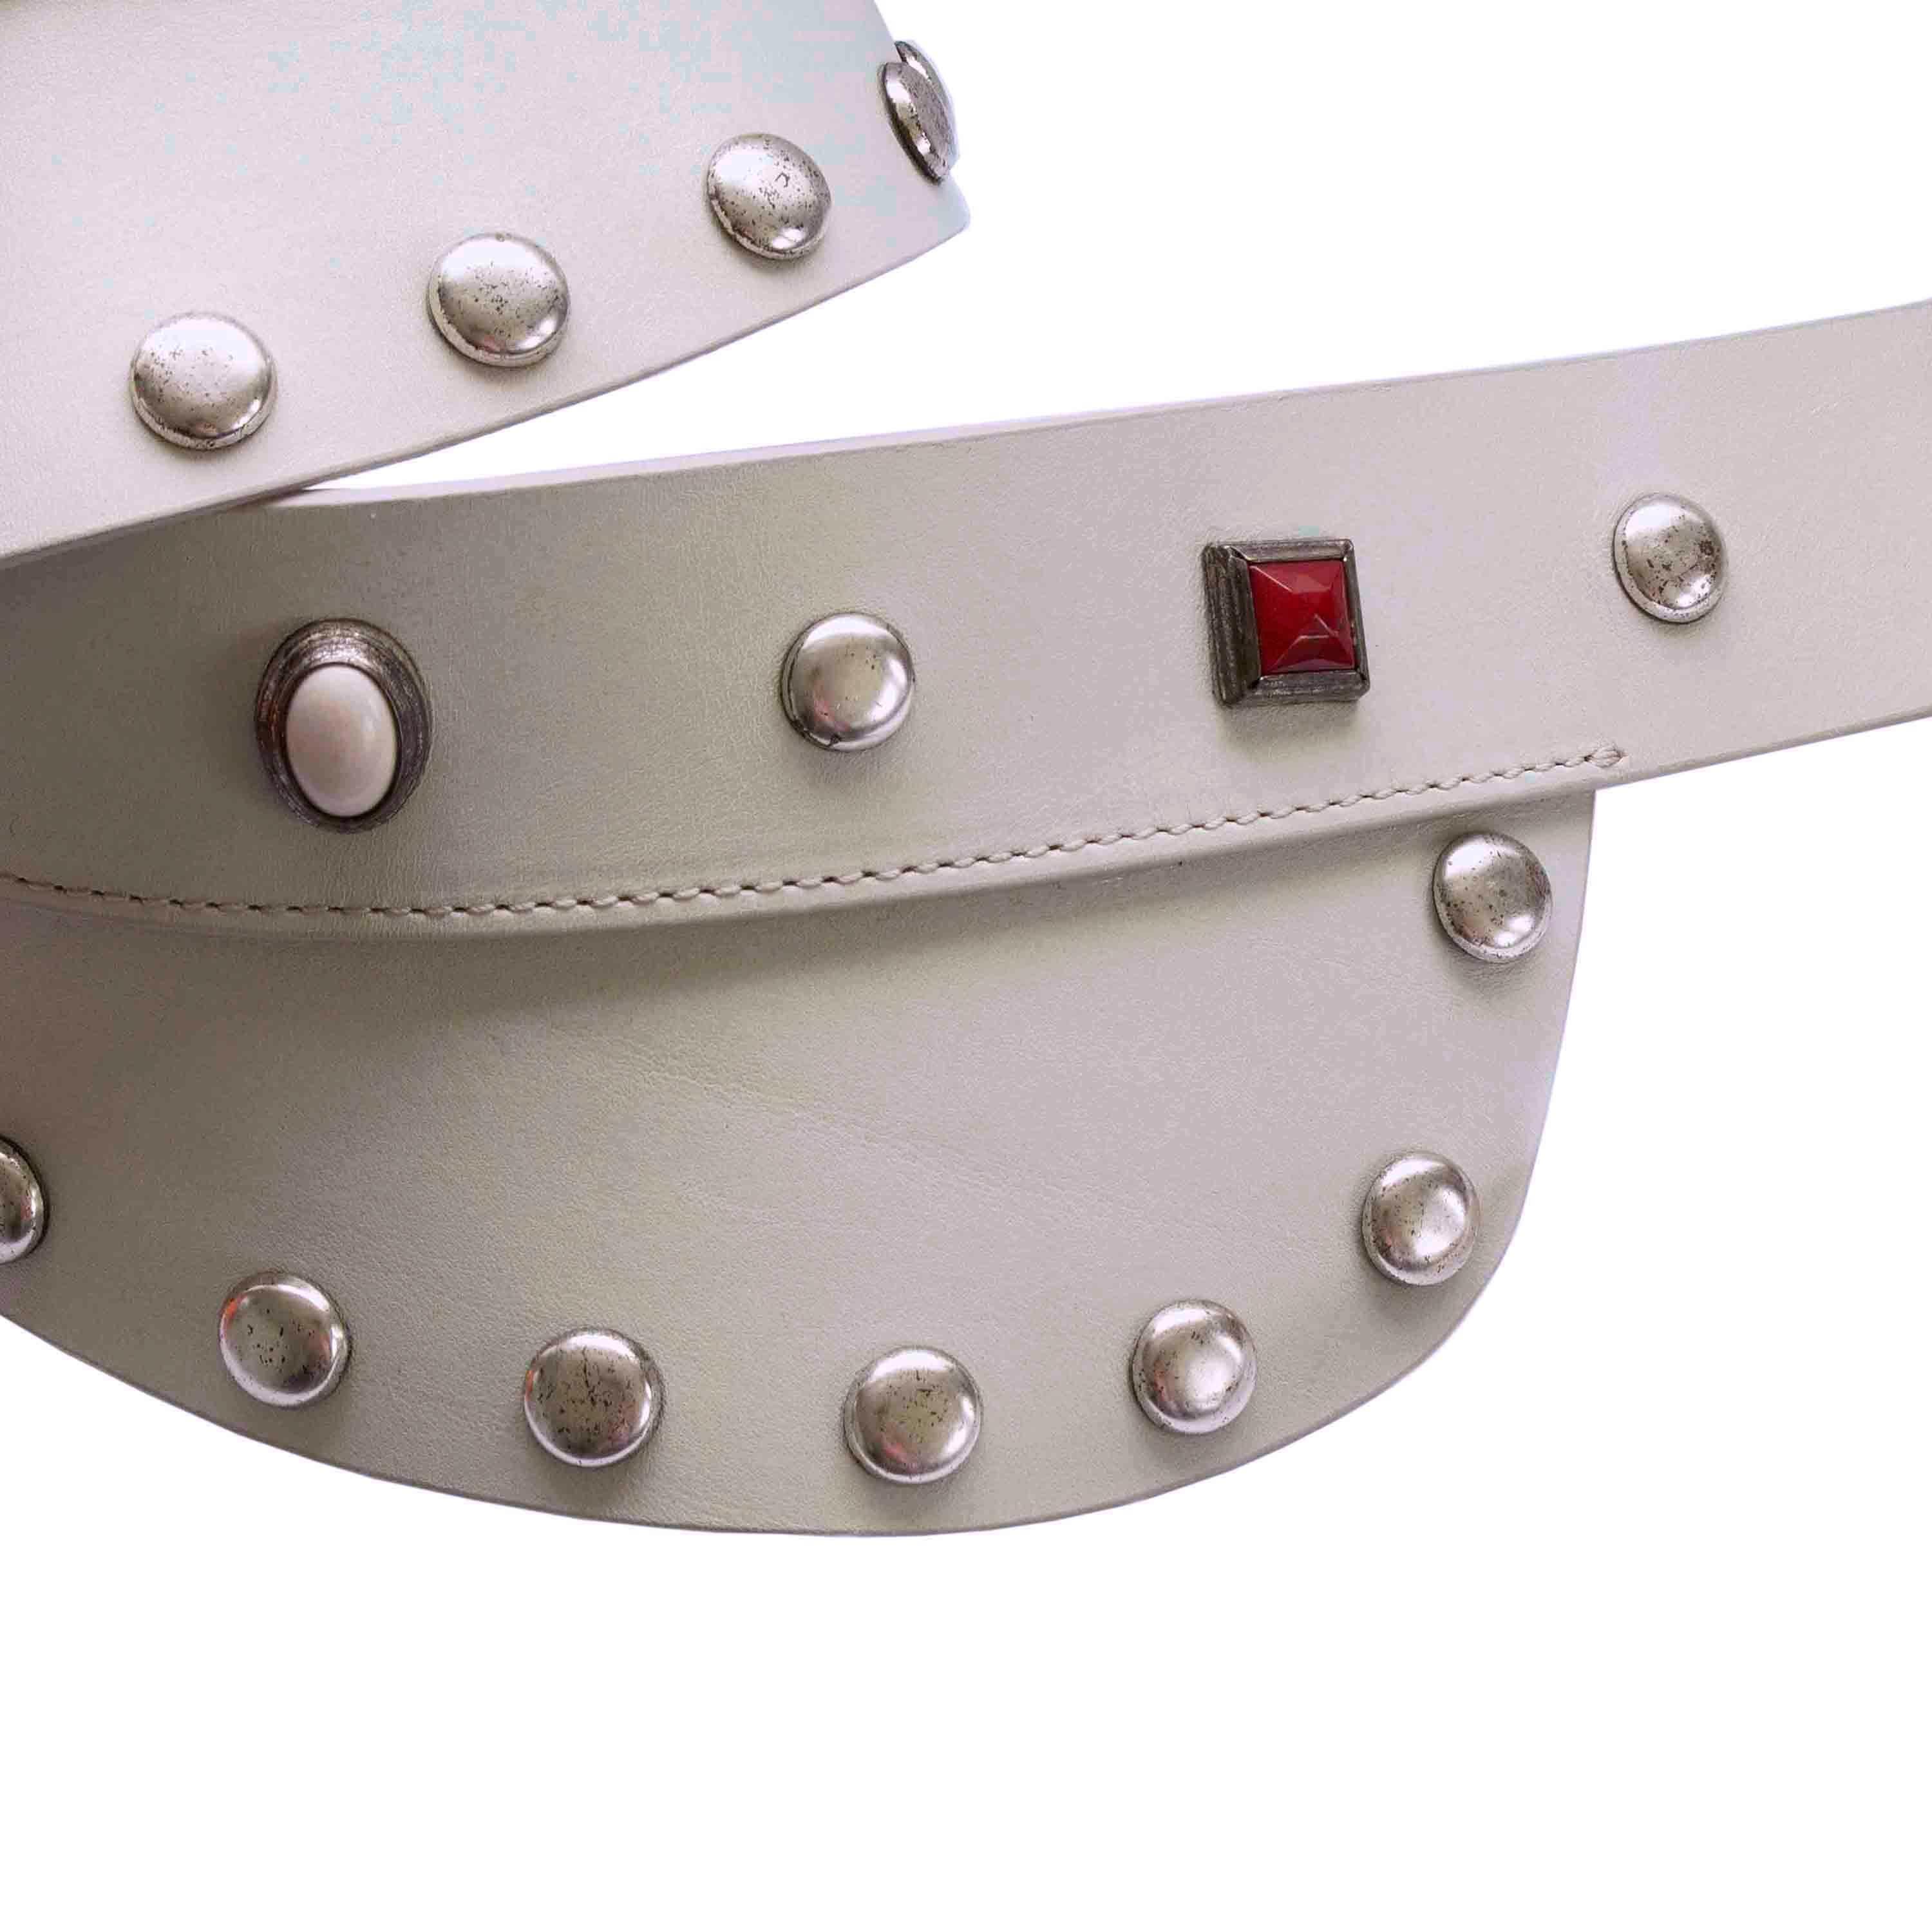 Isabel Marant Belt - Leather + Stud Detailing - Red & White Beading For Sale 1